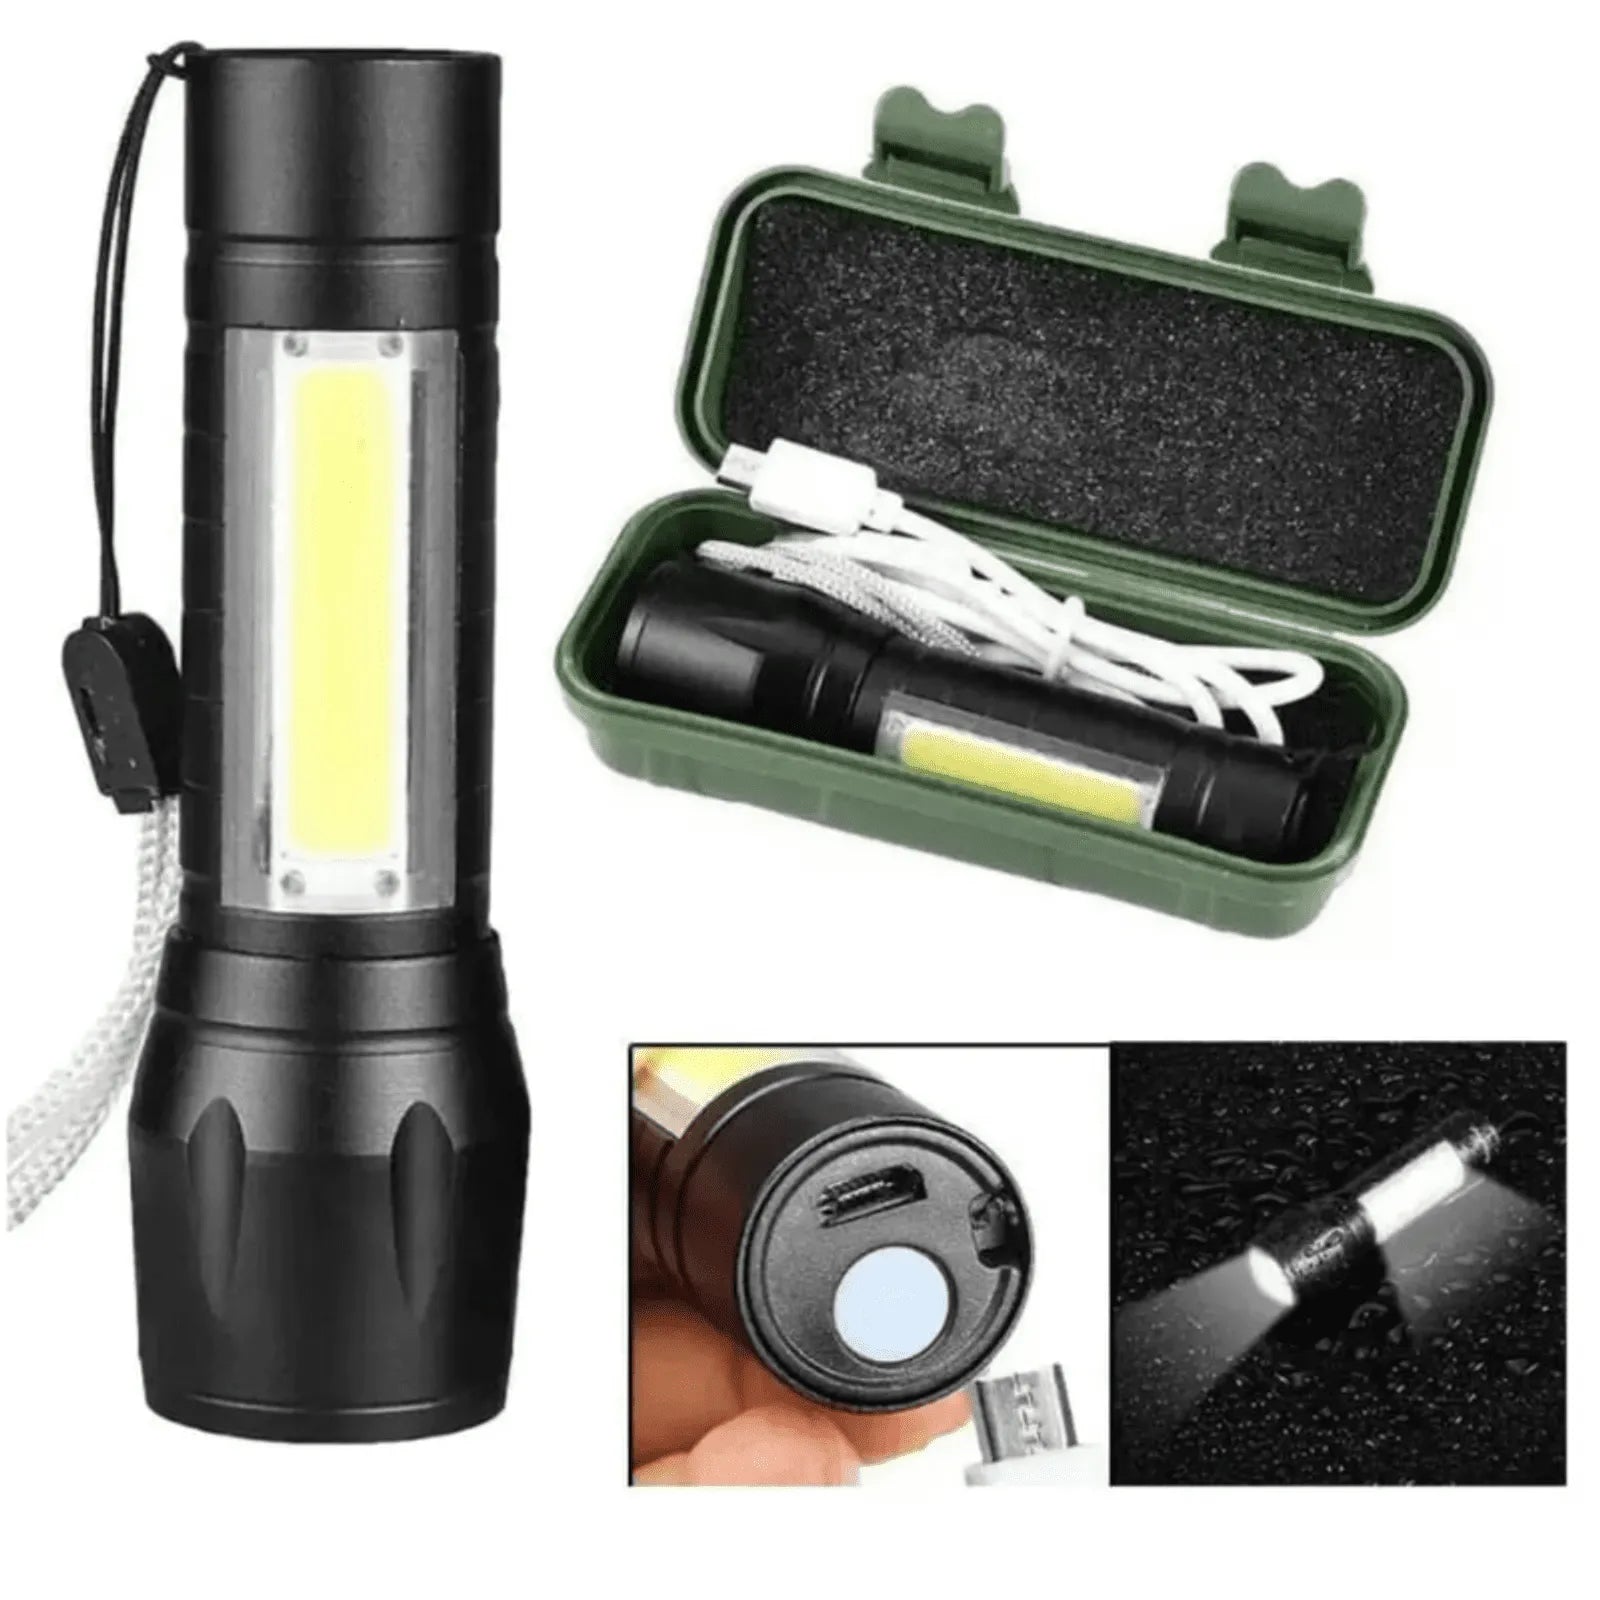 Mini Lanterna LED Recarregável com Zoom Ajustável - Via USB - Kaype Store